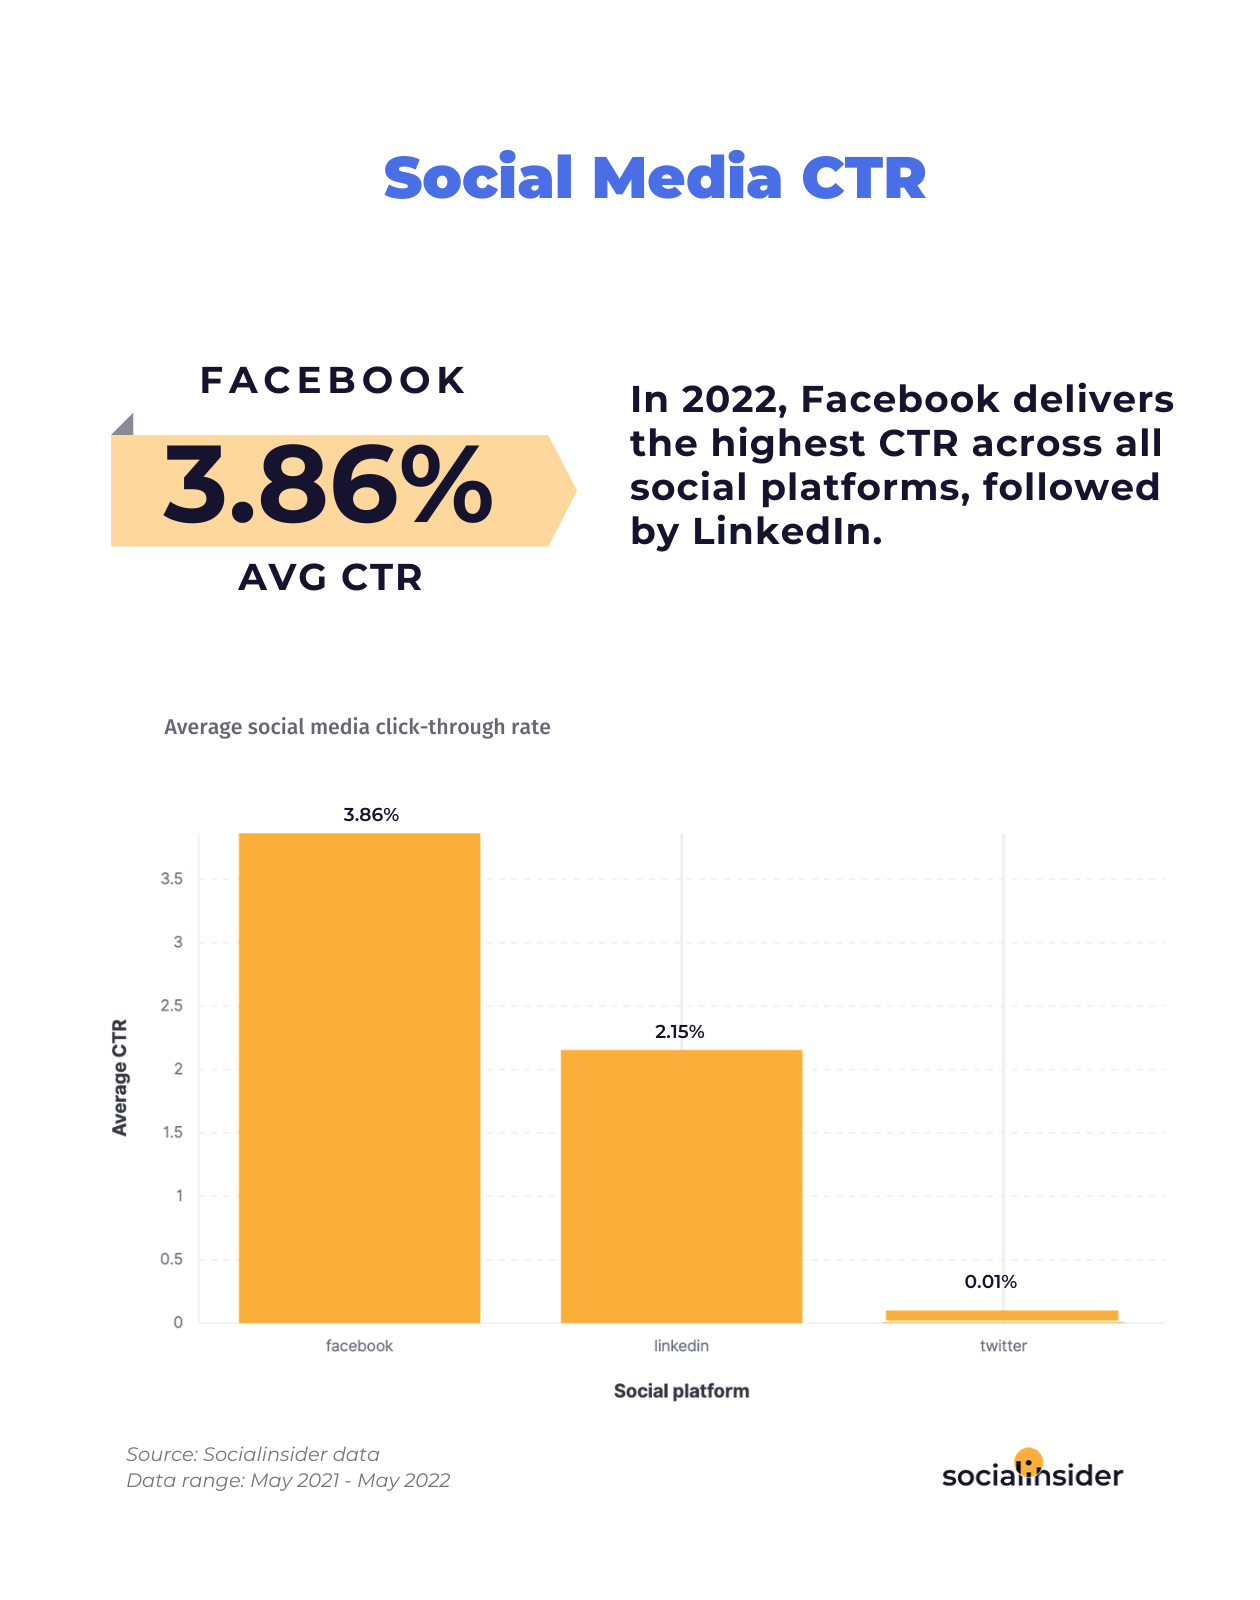 Statistics with social media CTR